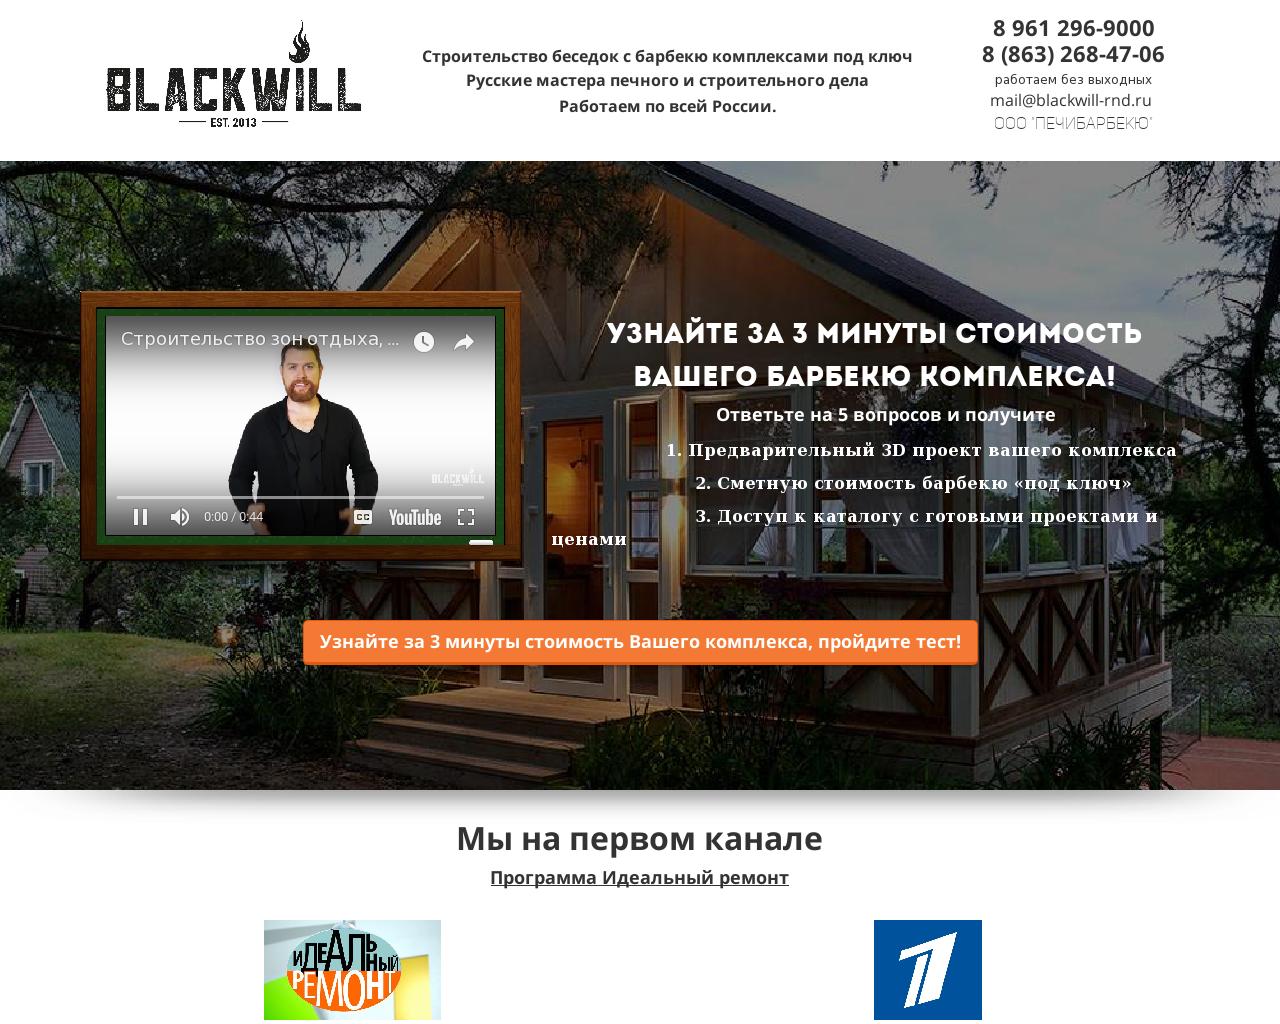 Изображение сайта blackwill-rnd.ru в разрешении 1280x1024